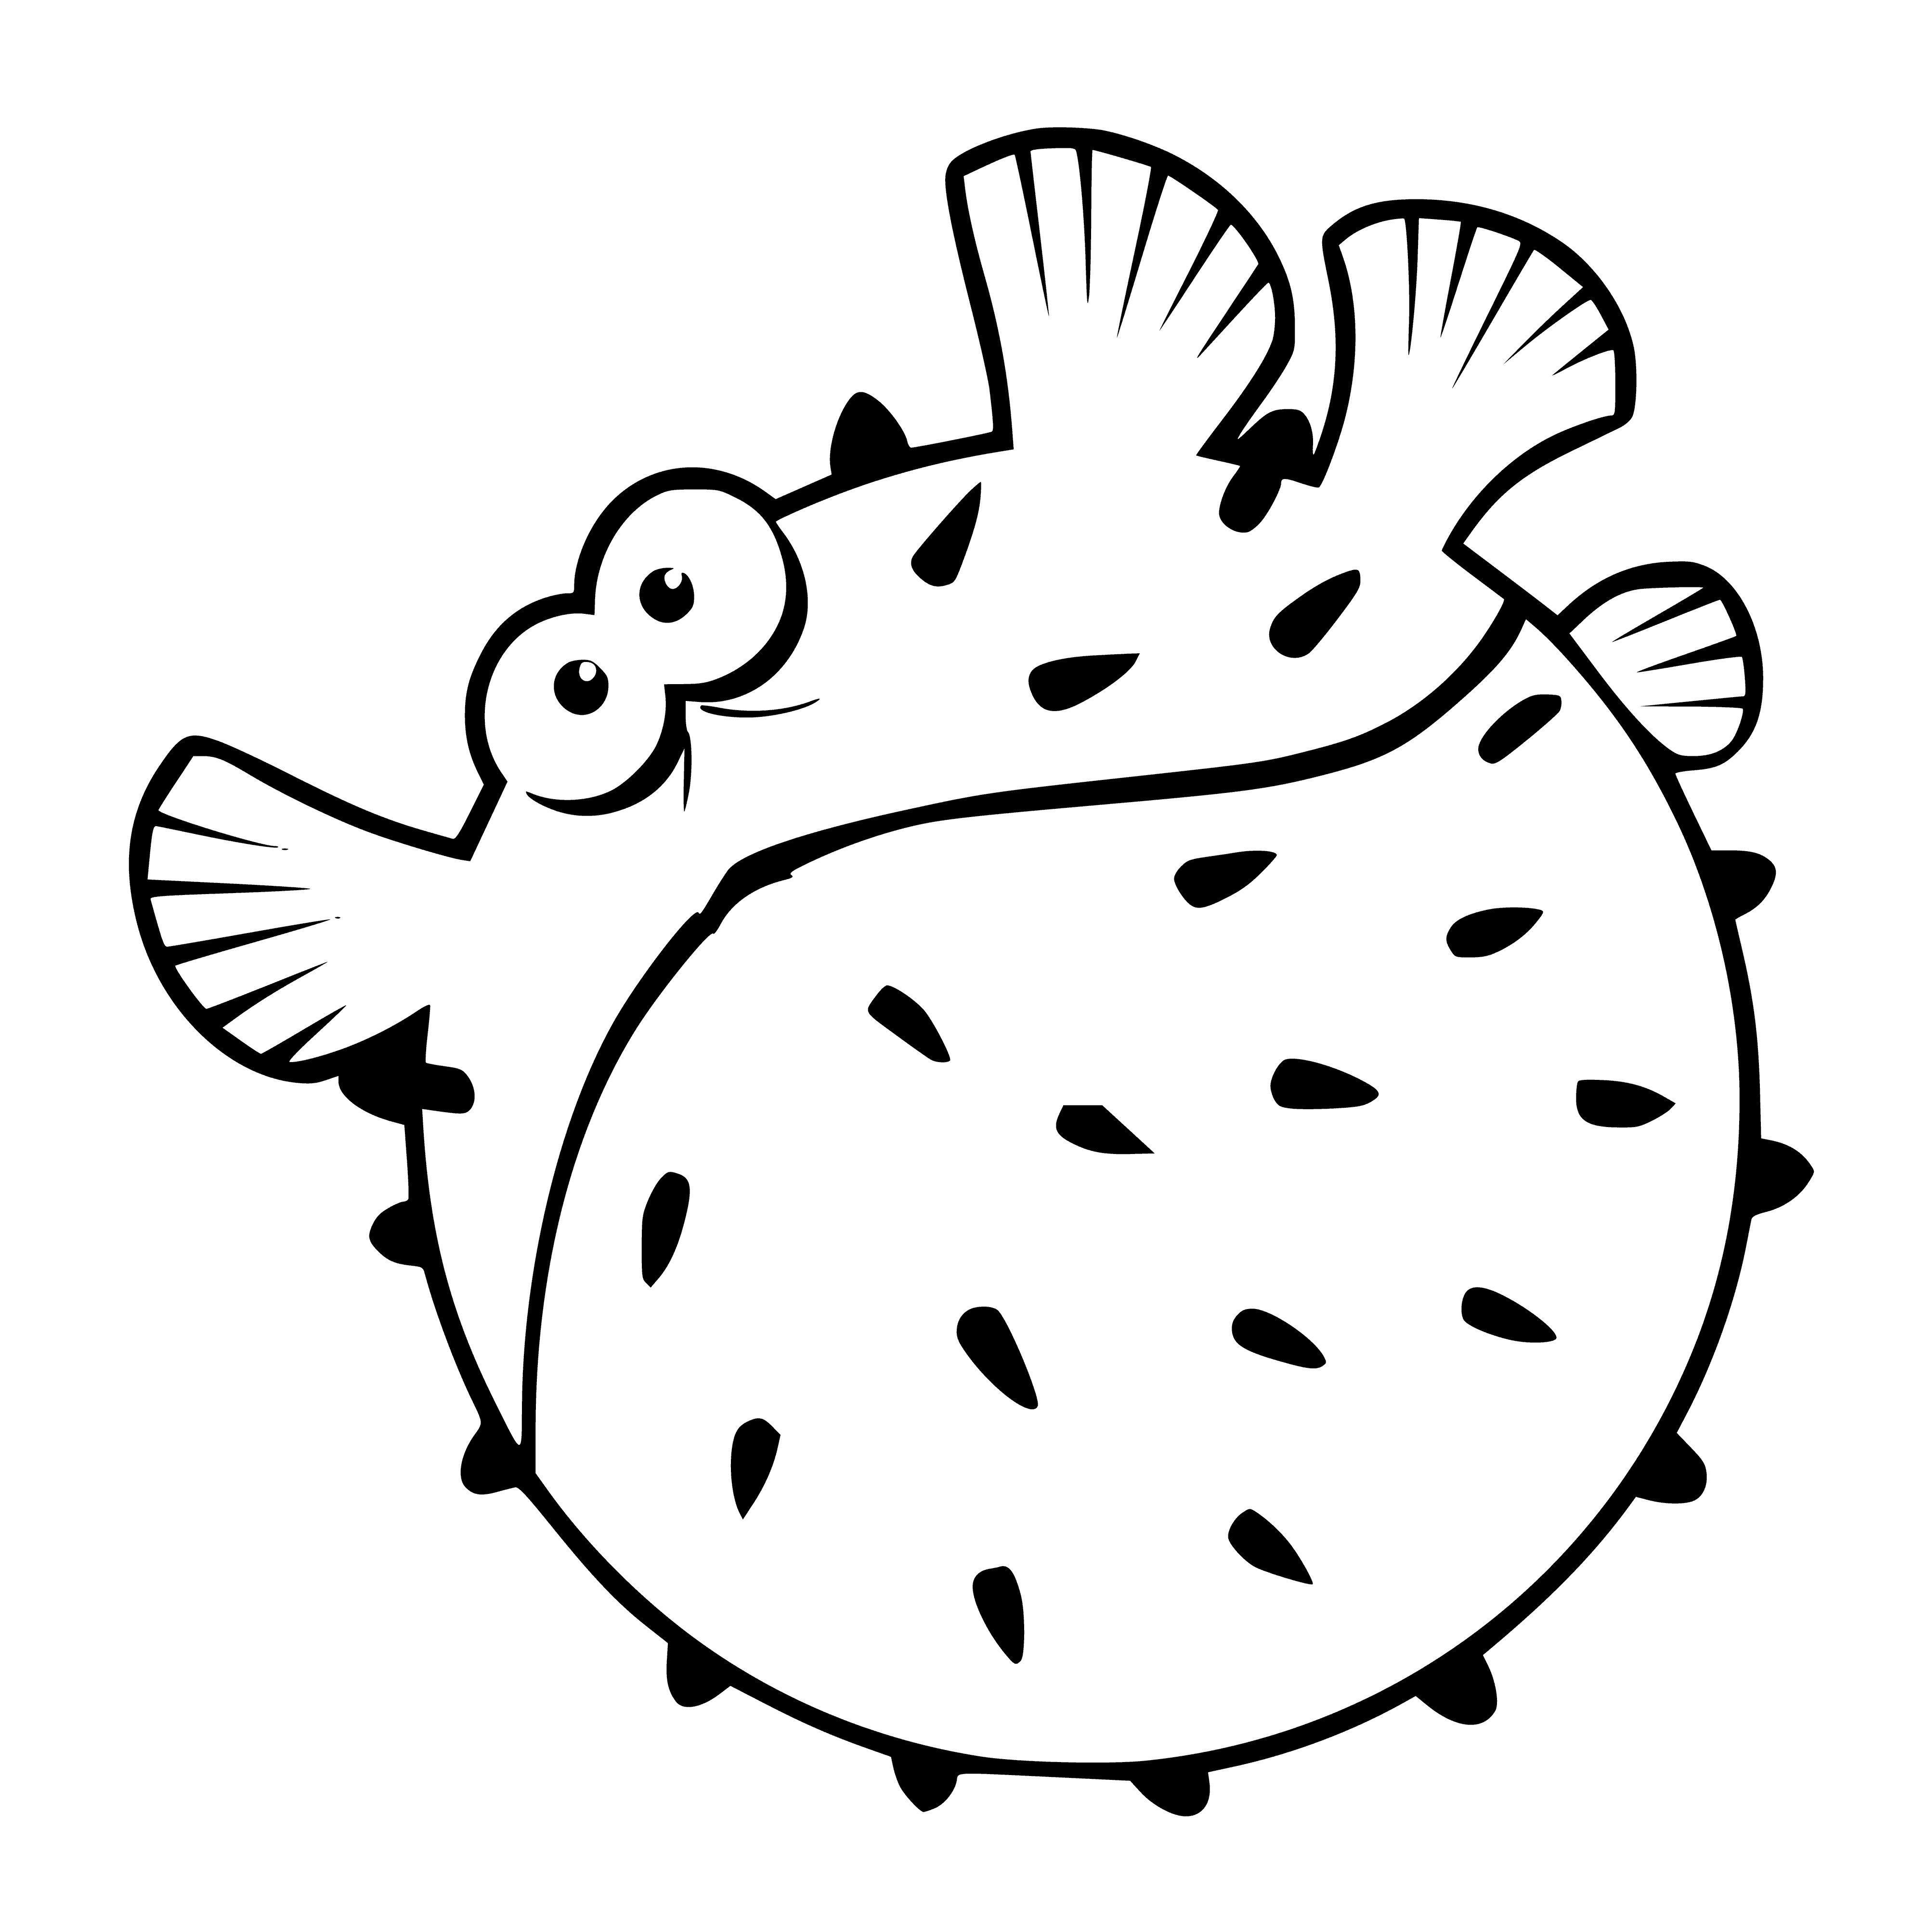 Fish ball coloring page